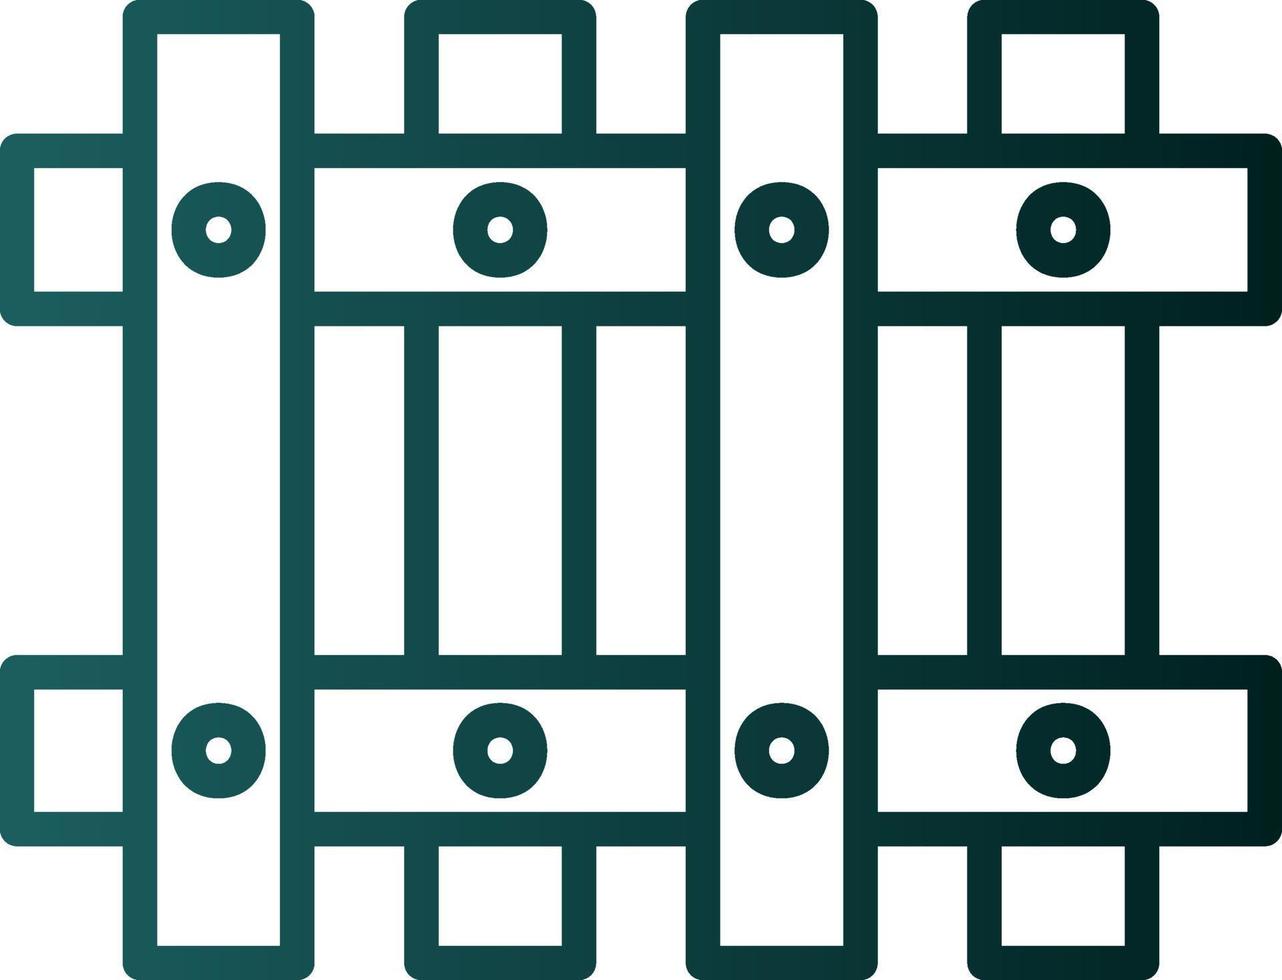 Fence Vector Icon Design